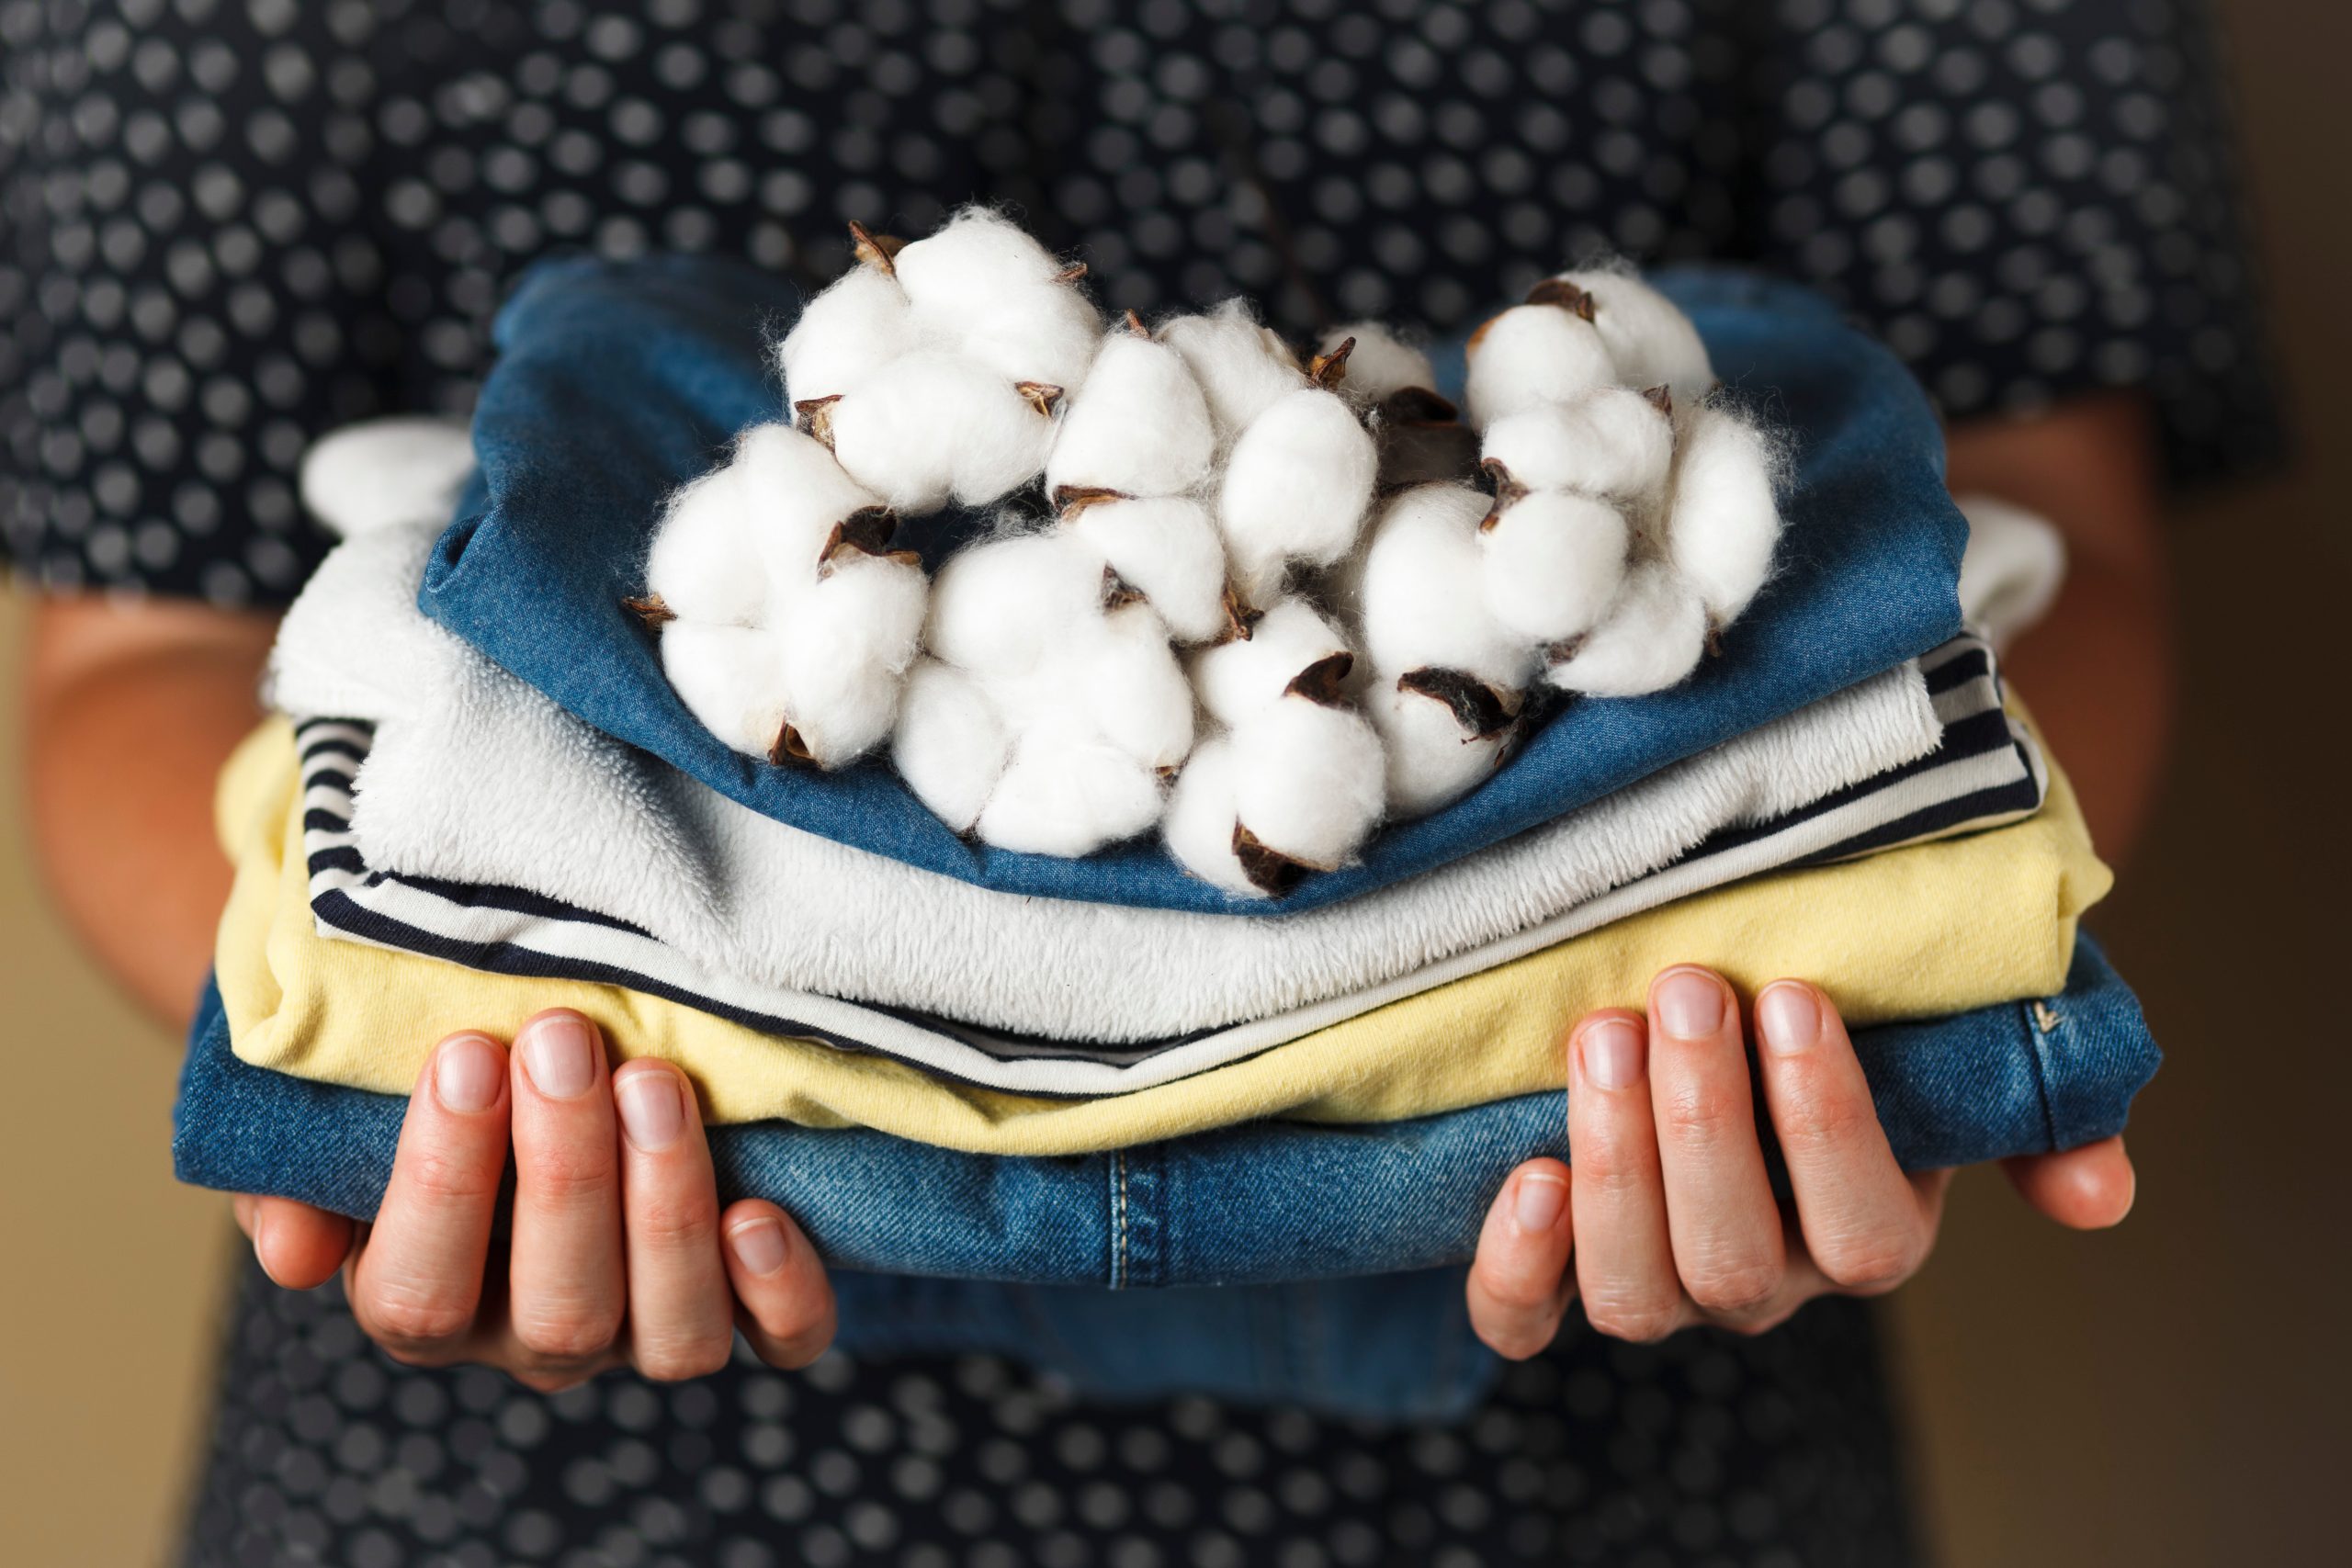 BCI – Better Cotton Initiative